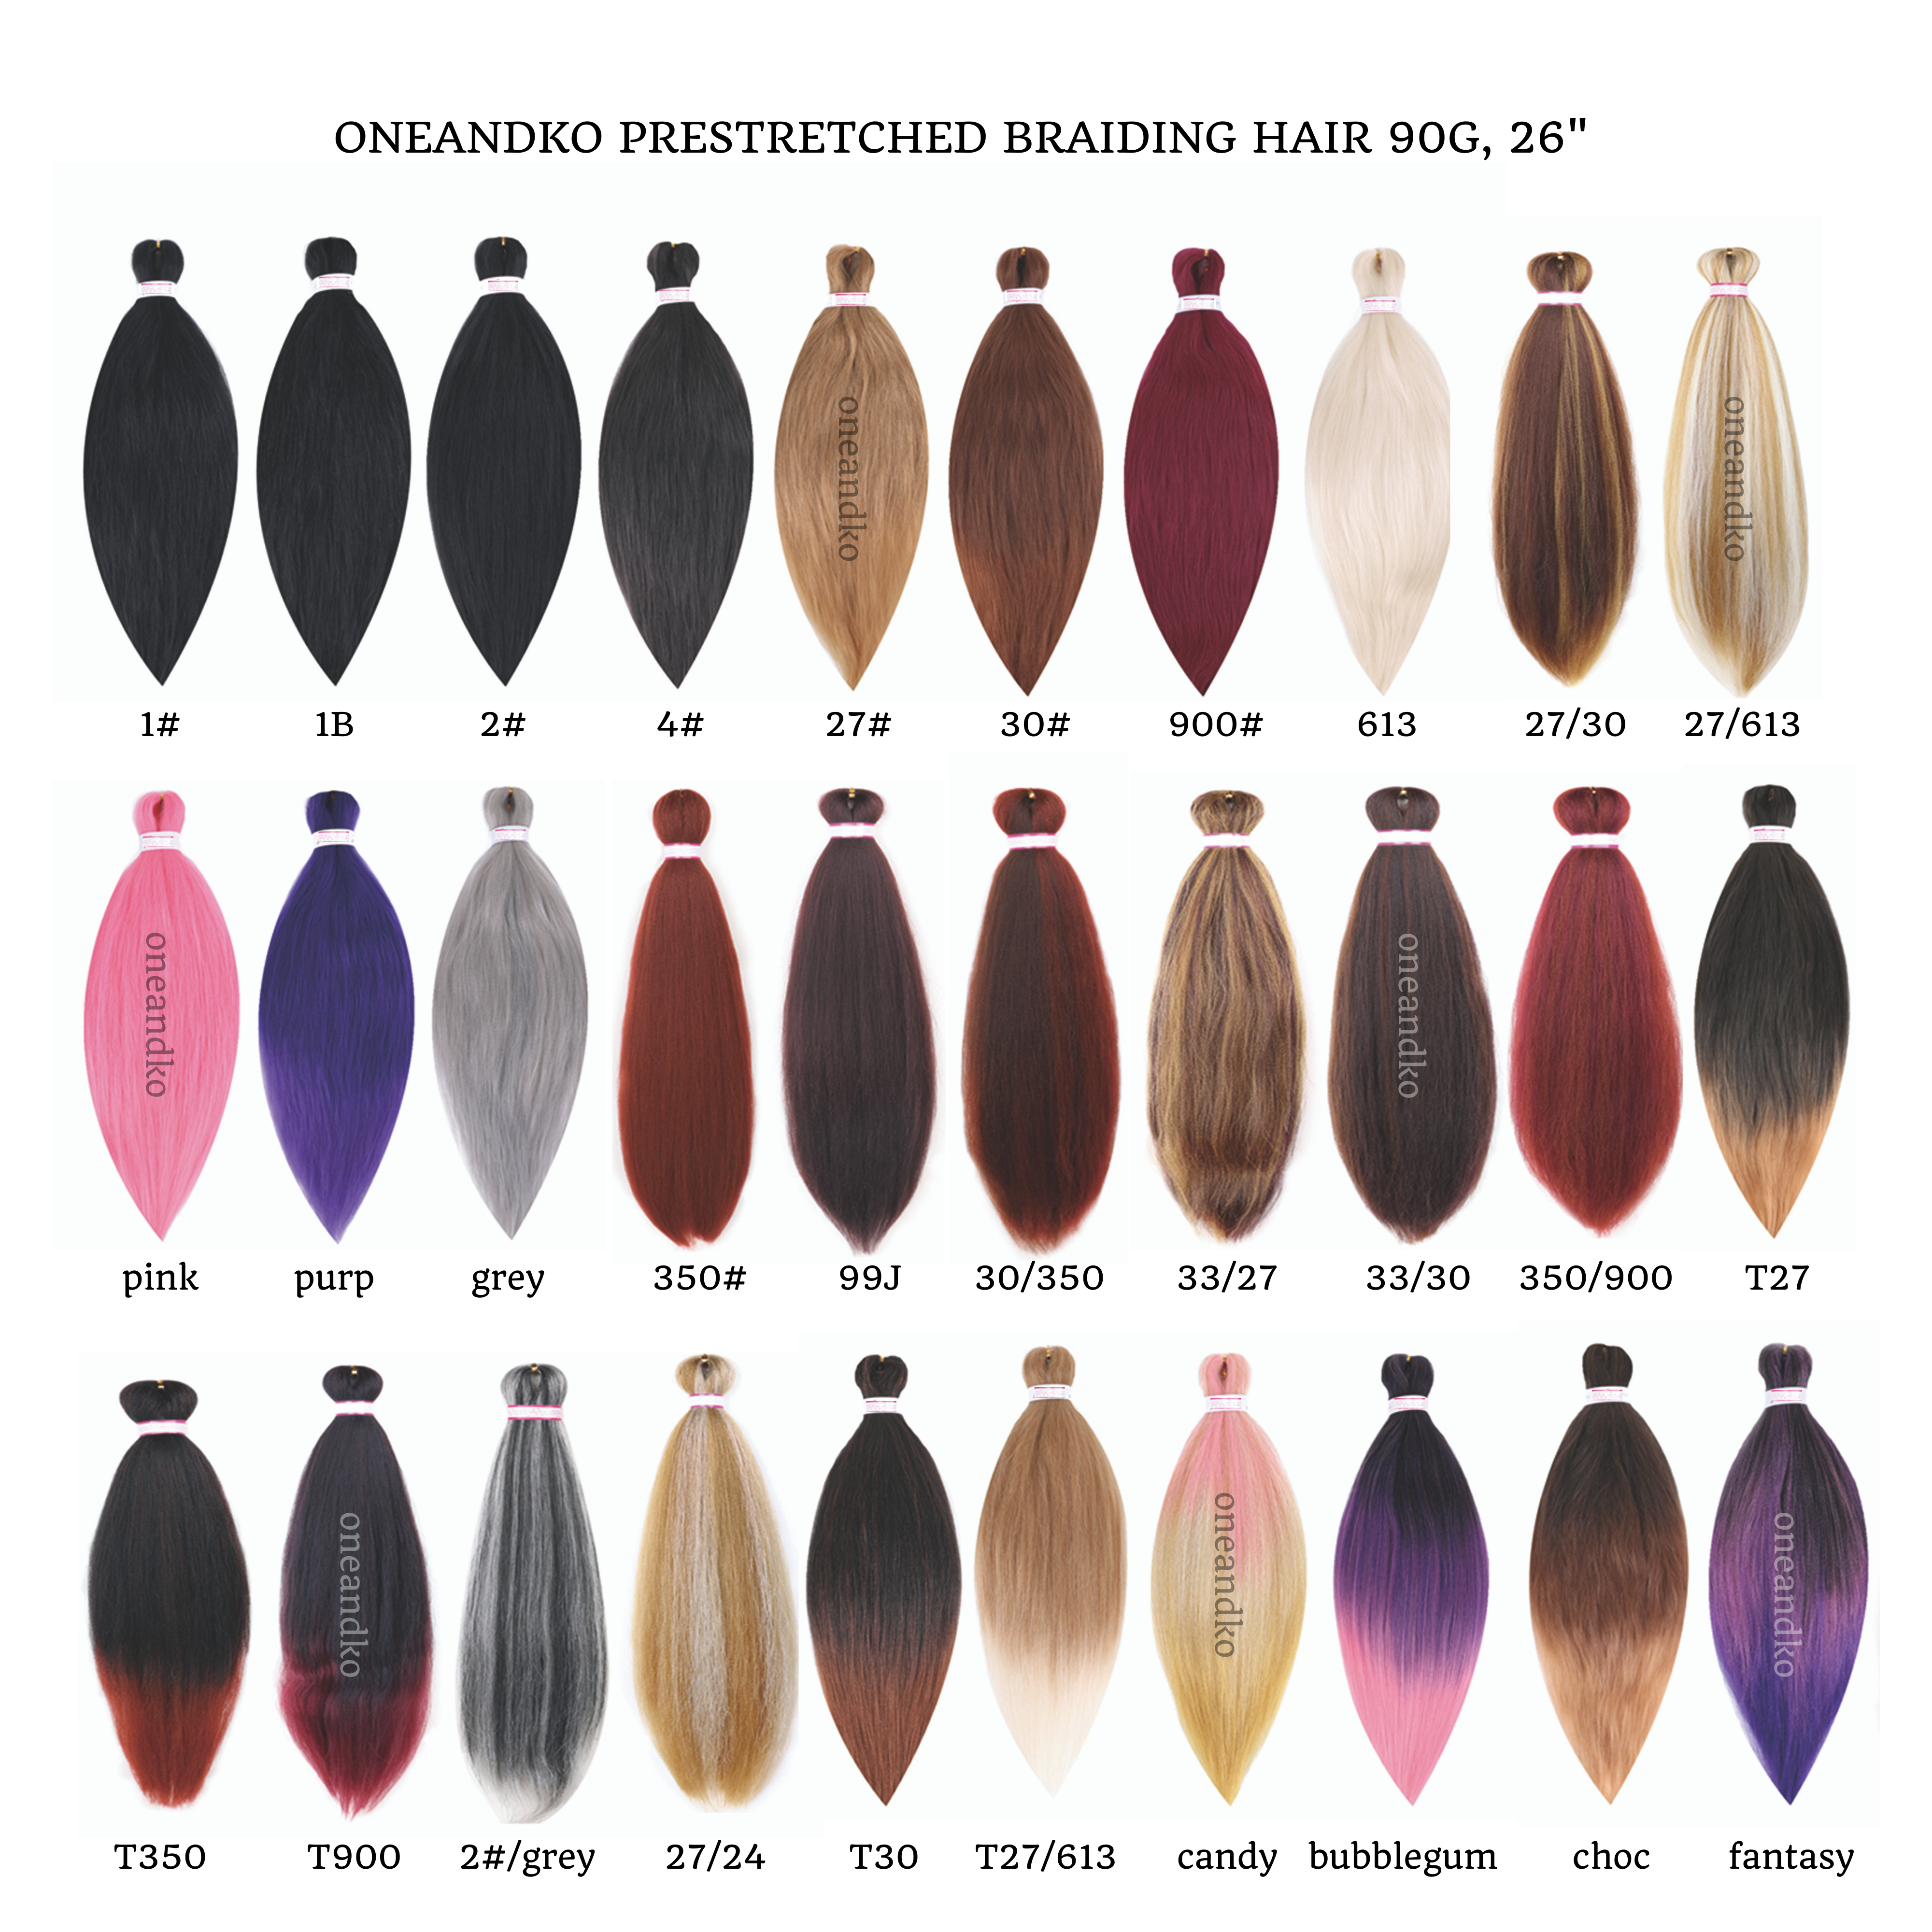 Prestretched Braiding Hair - OneandKo